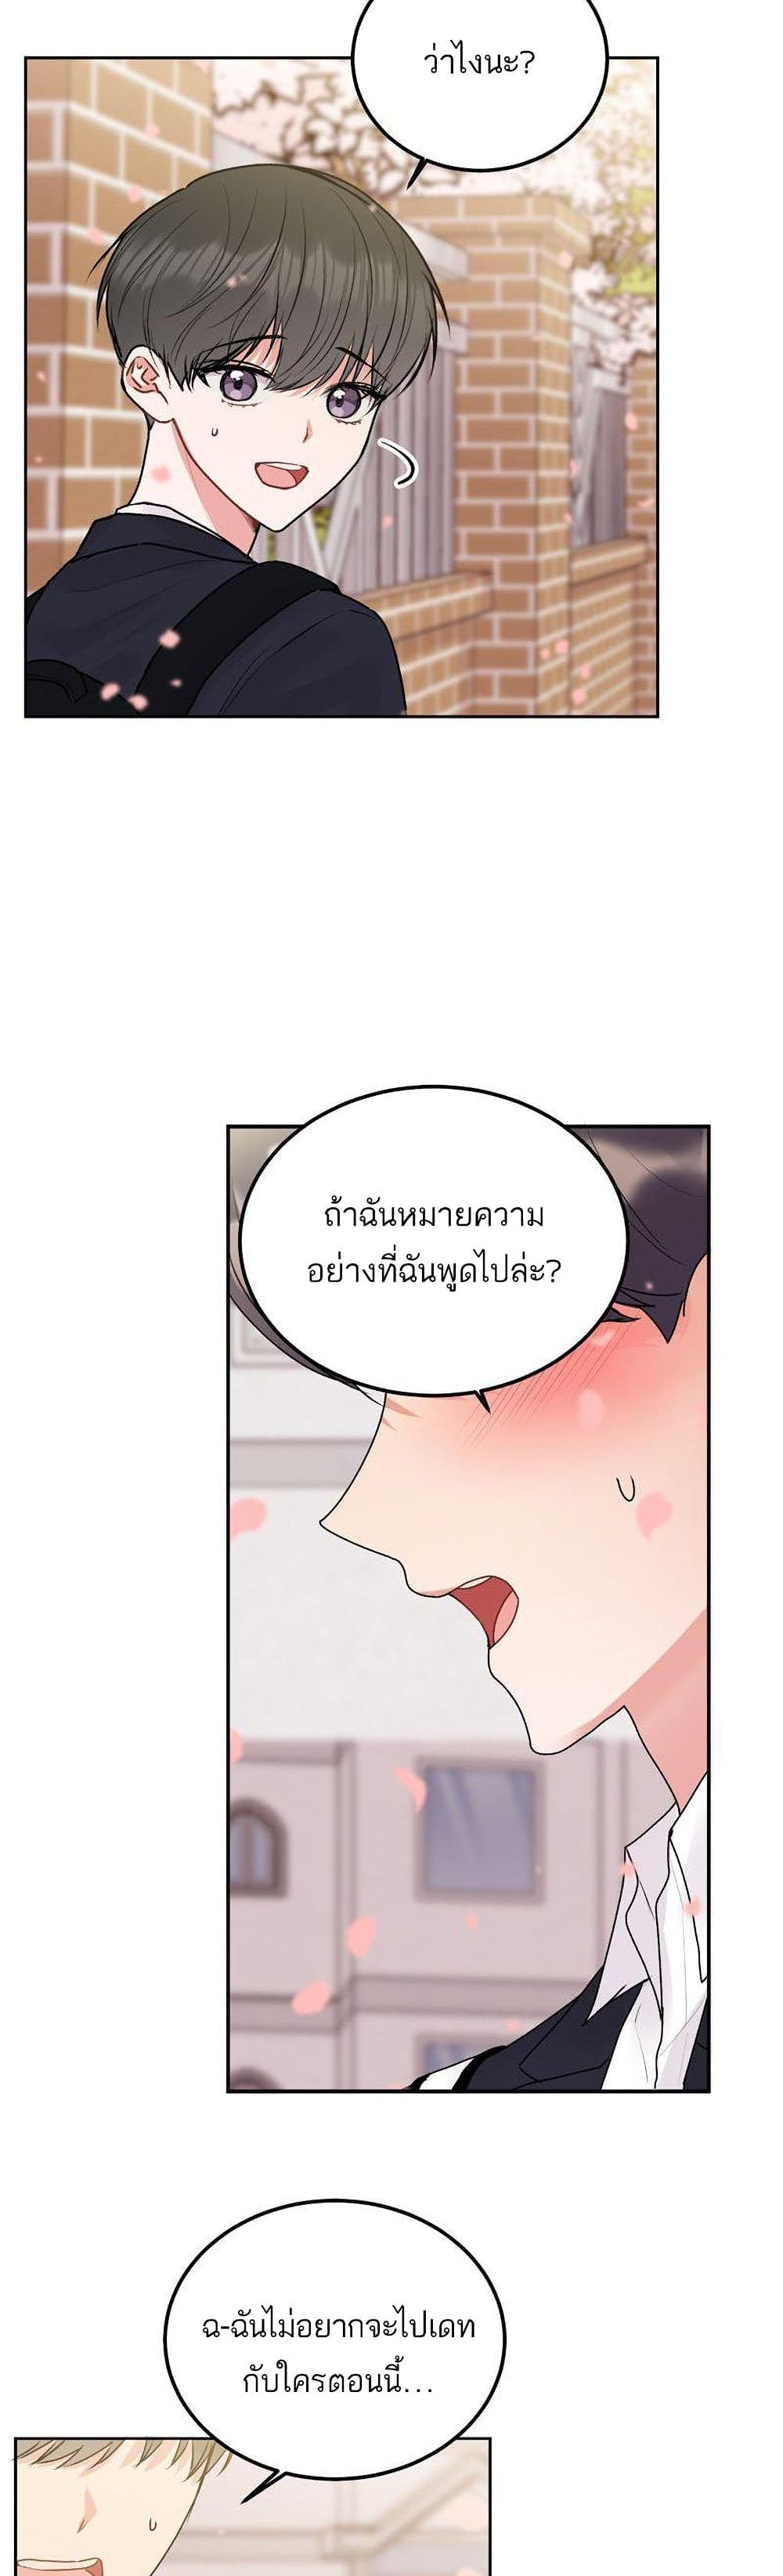 Don’t Cry, Sunbae! 36 (13)